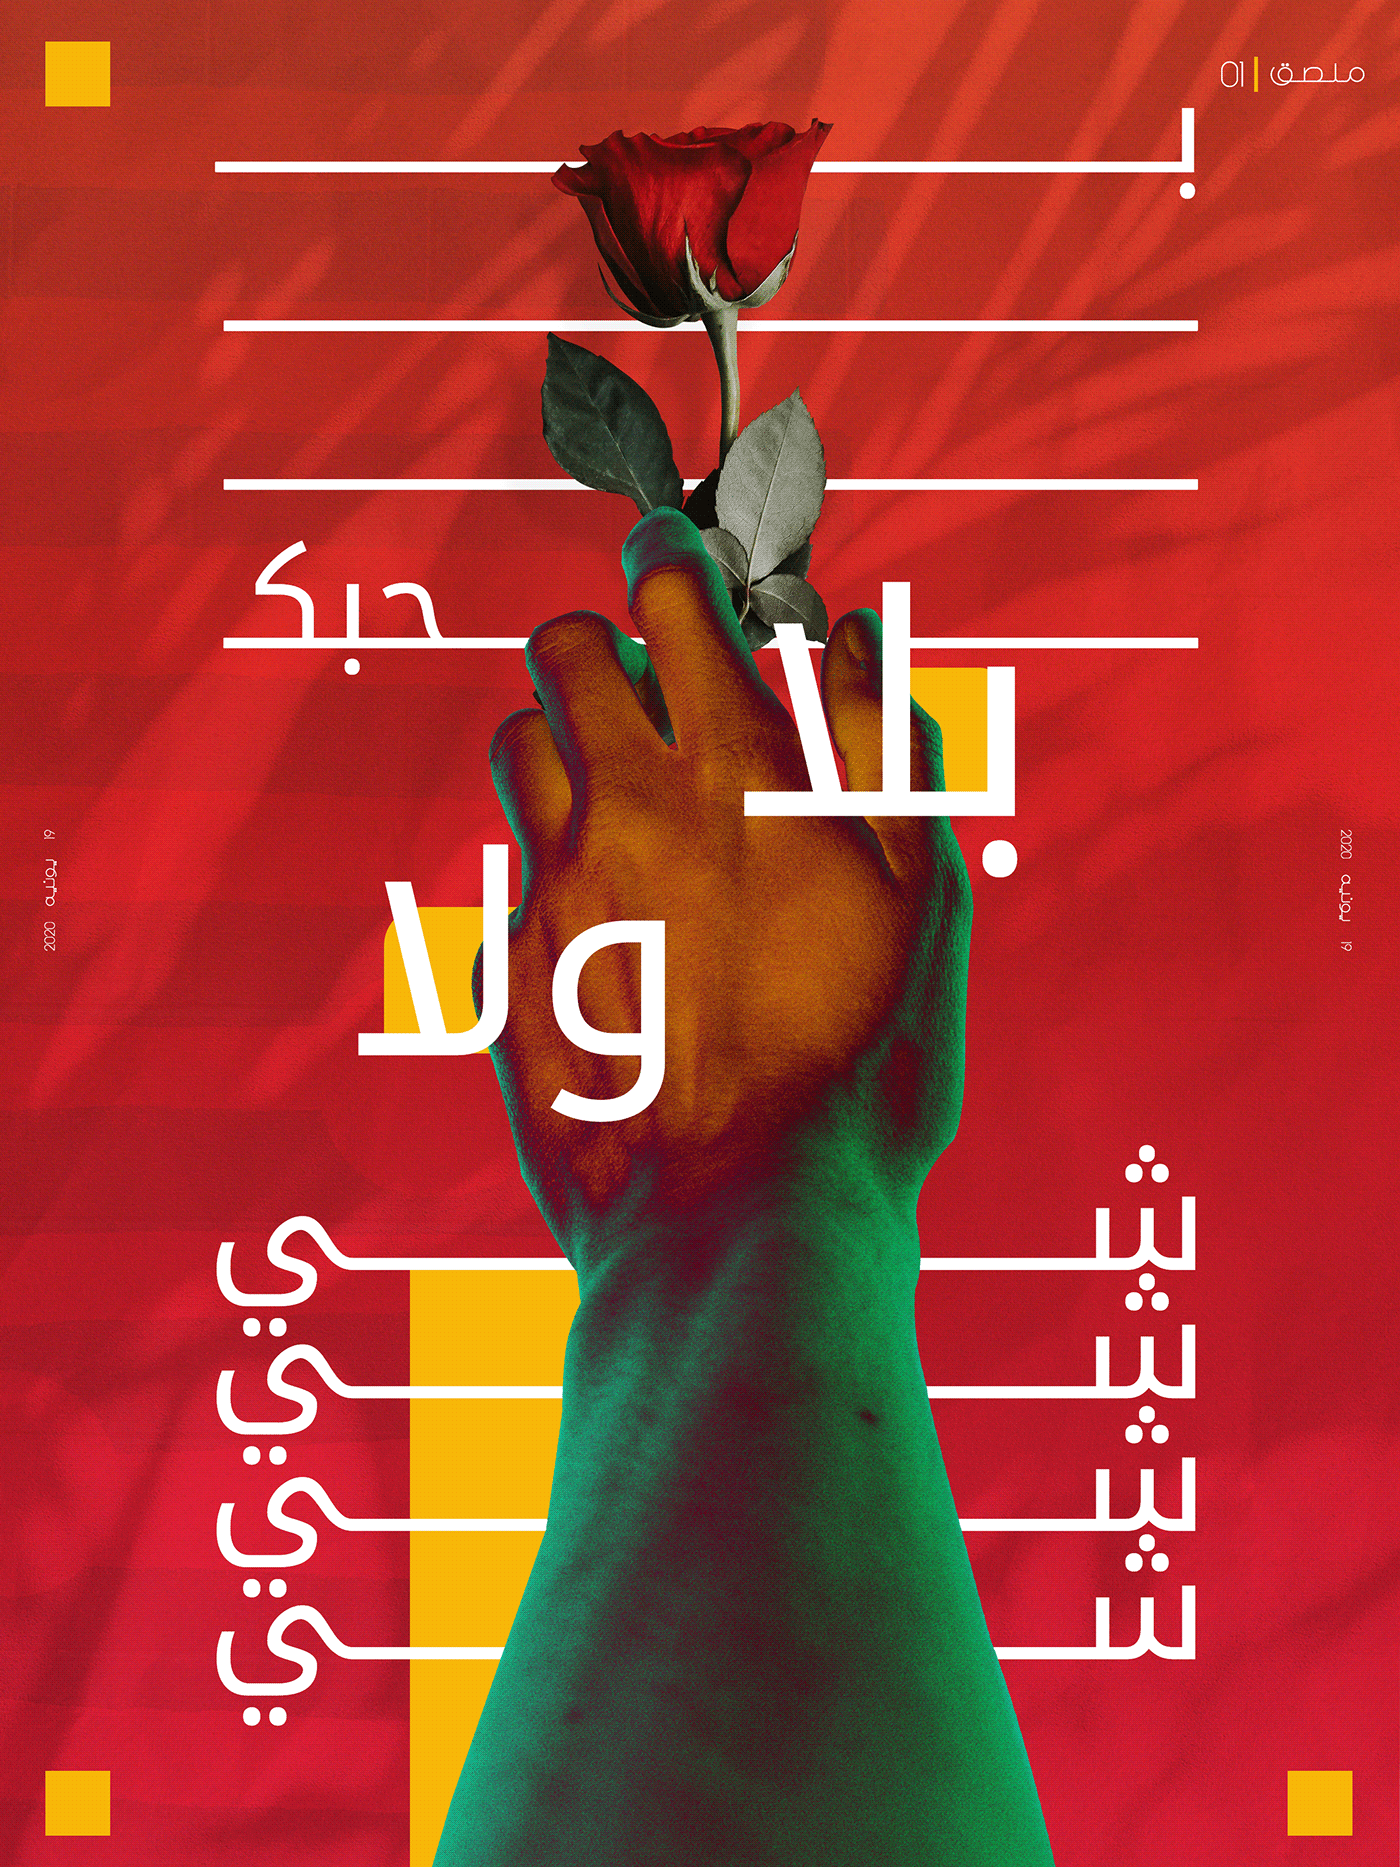 abstract adobe illustrator artwork design Digital Art  experimental graphic Layout Poster Design typography  